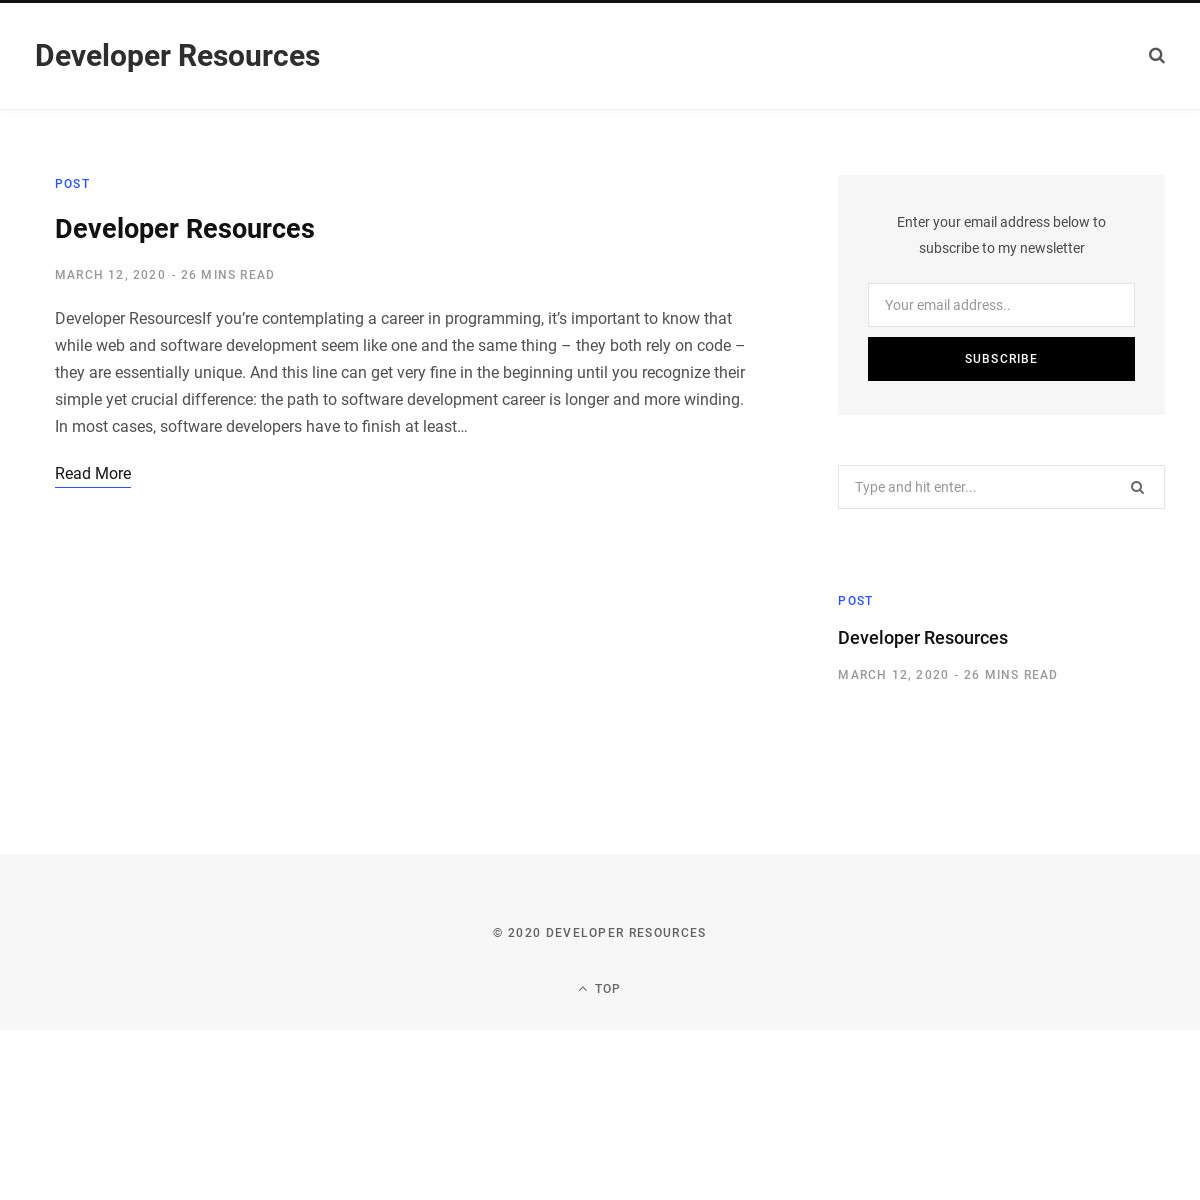 A complete backup of devsource.com